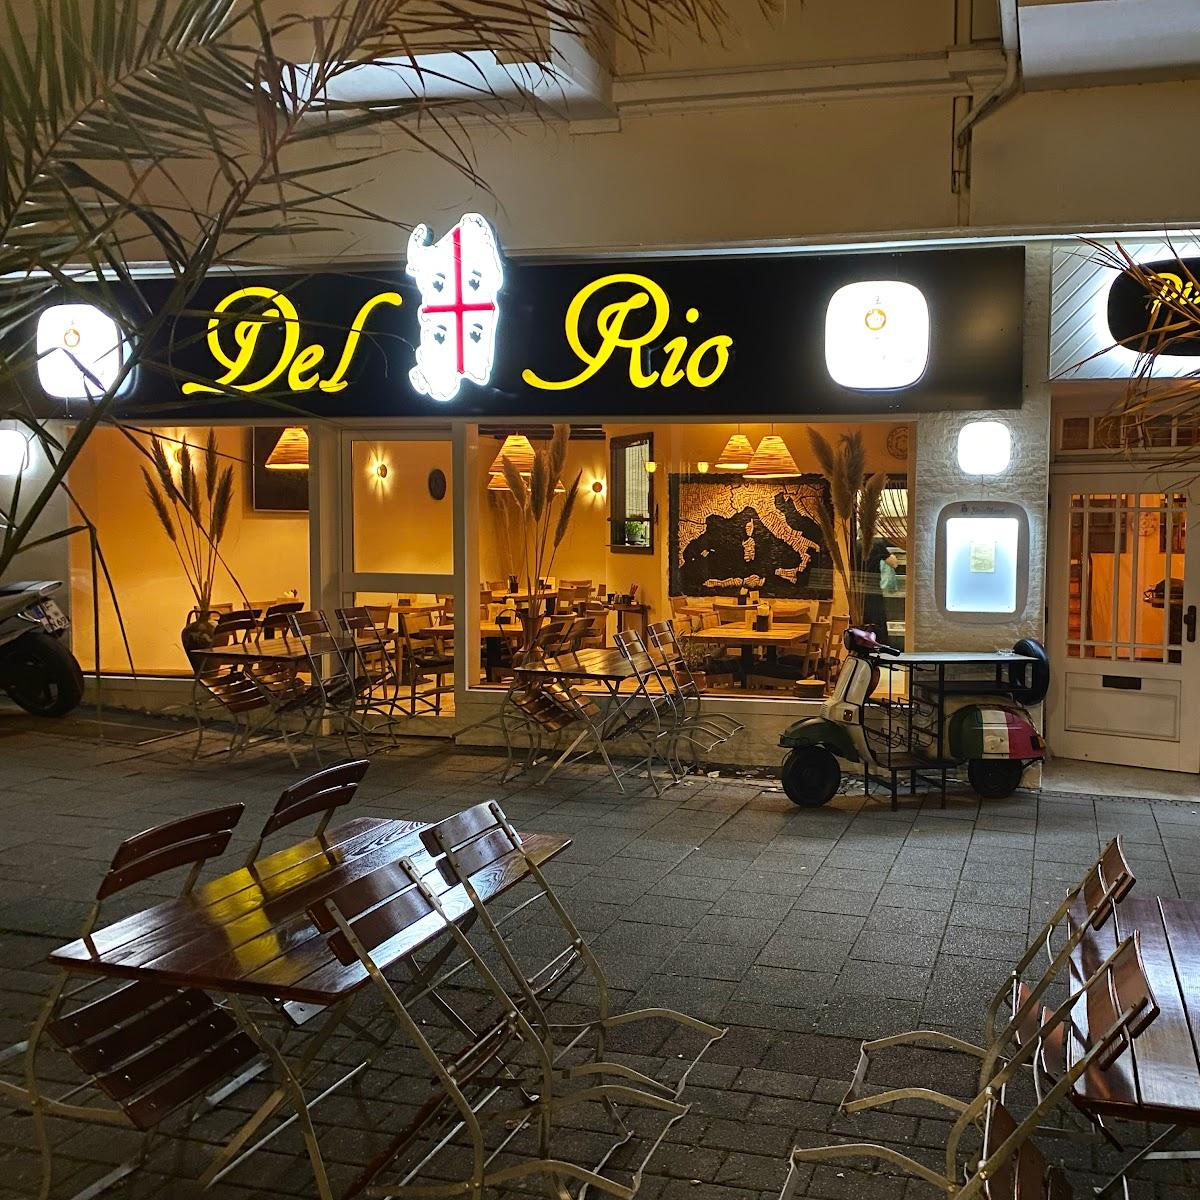 Restaurant "Del Rio" in Bad Oeynhausen